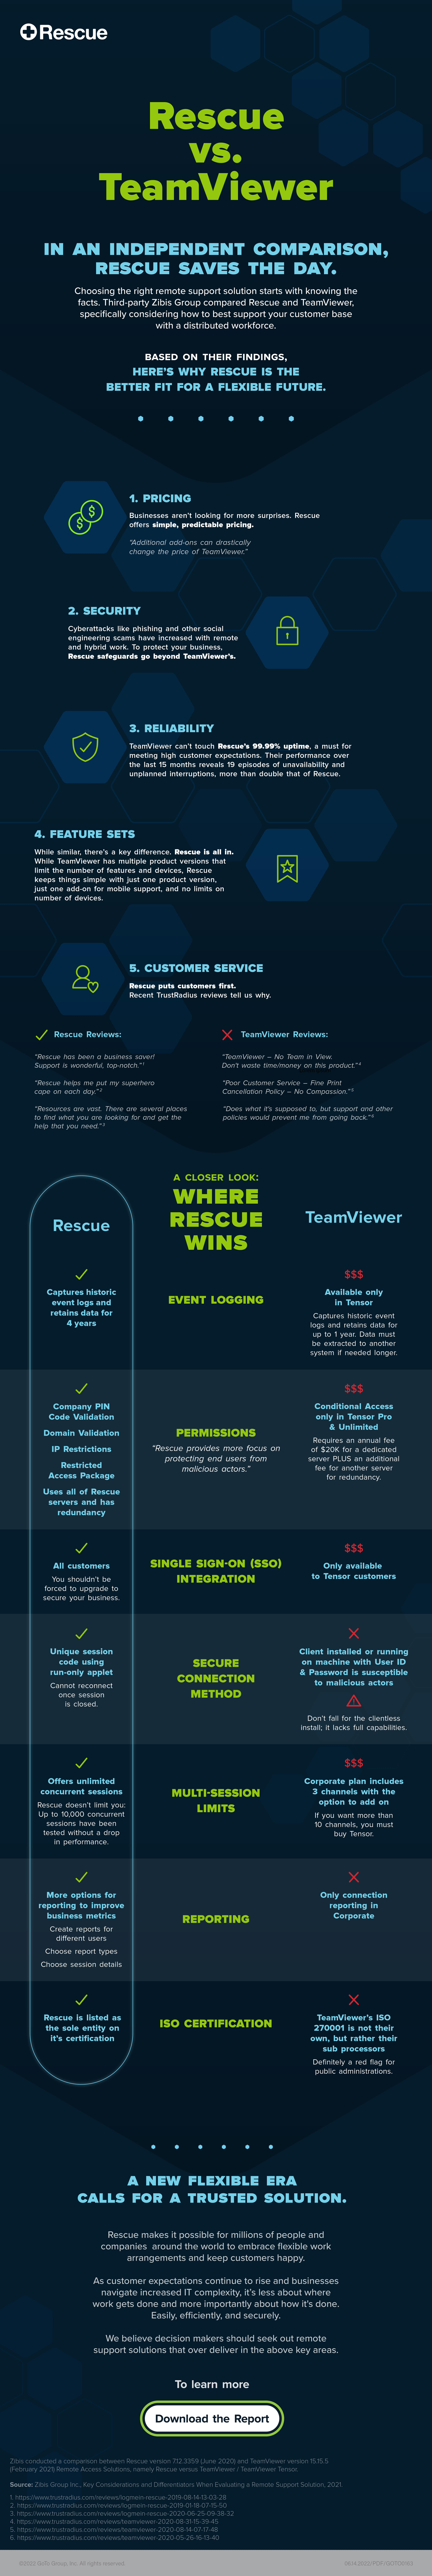 LogMeIn Rescue vs TeamViewer EN